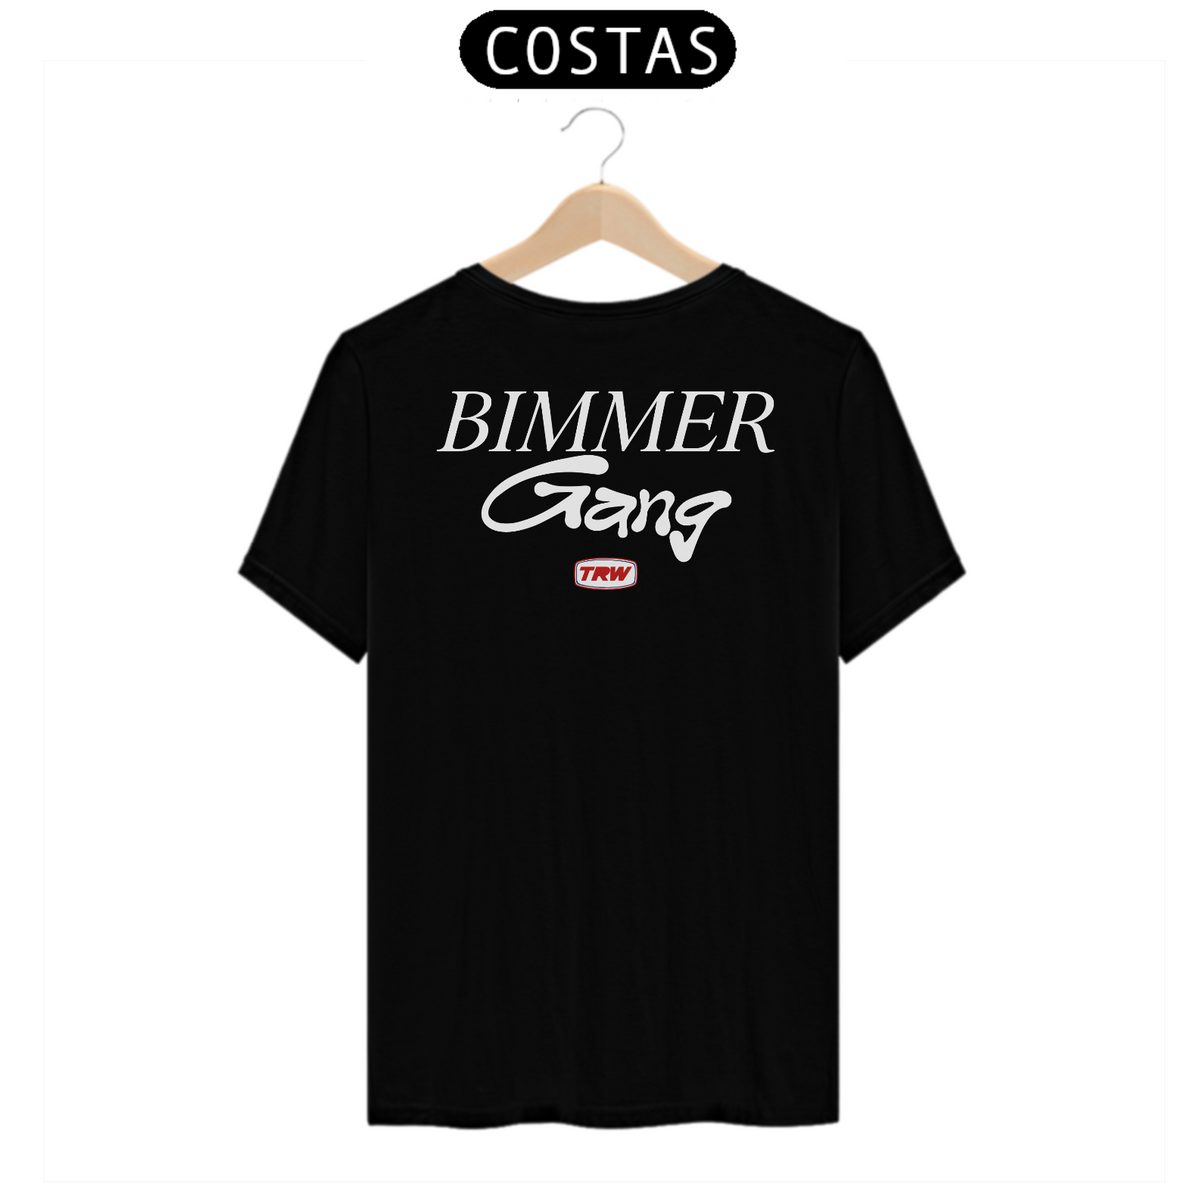 Nome do produto: Camiseta Bimmer Gang - Preta